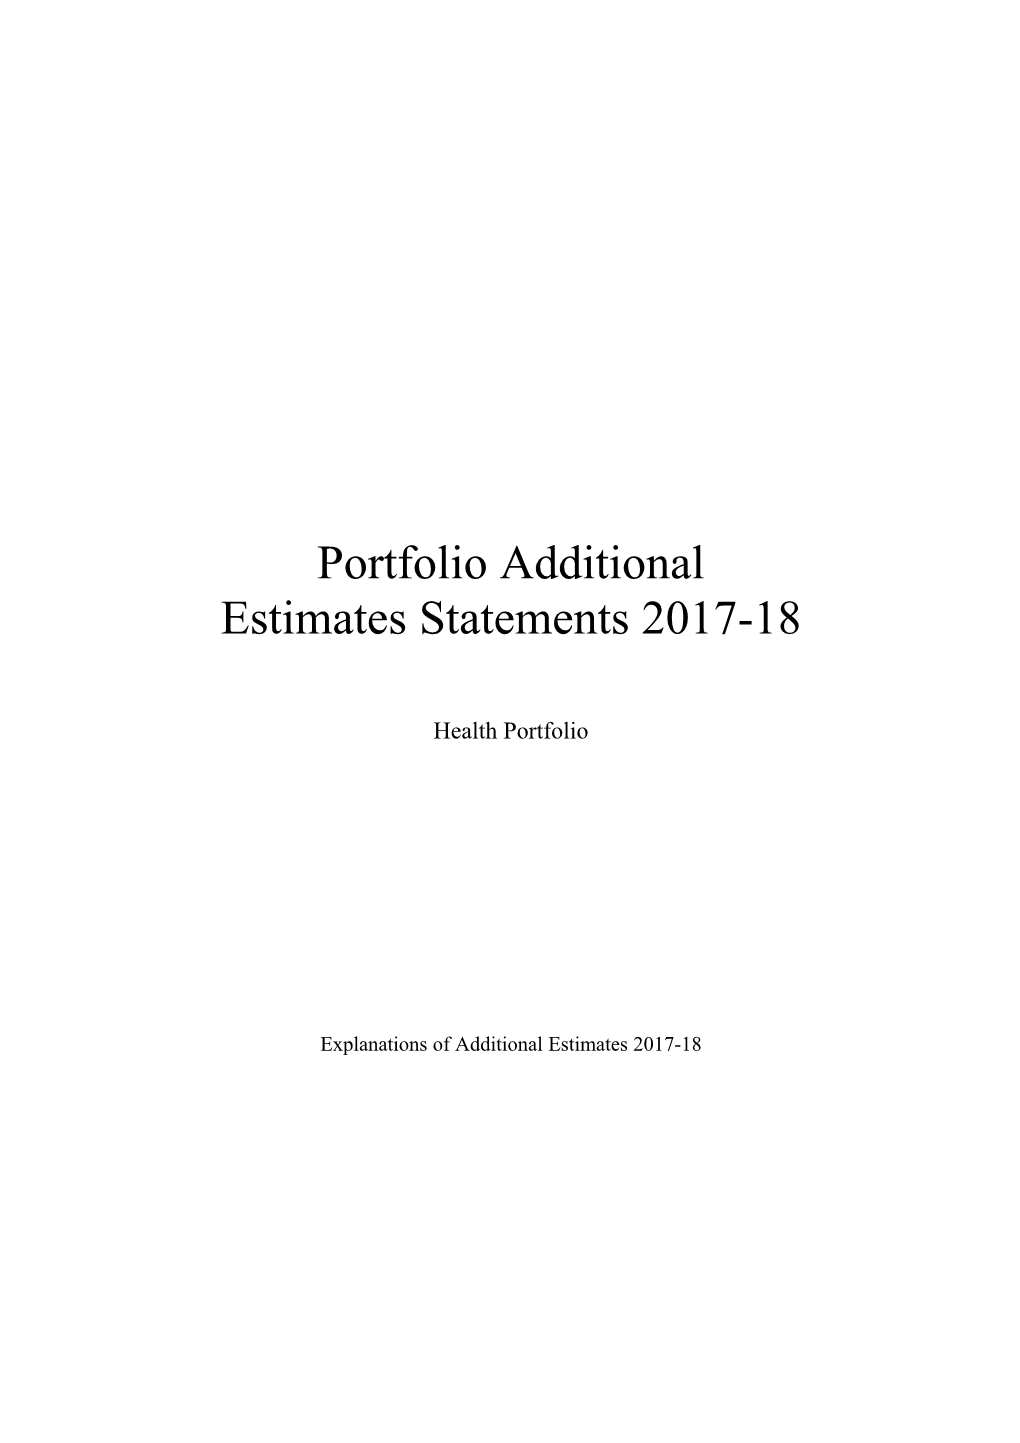 Portfolio Additional Estimatesstatements 2017-18